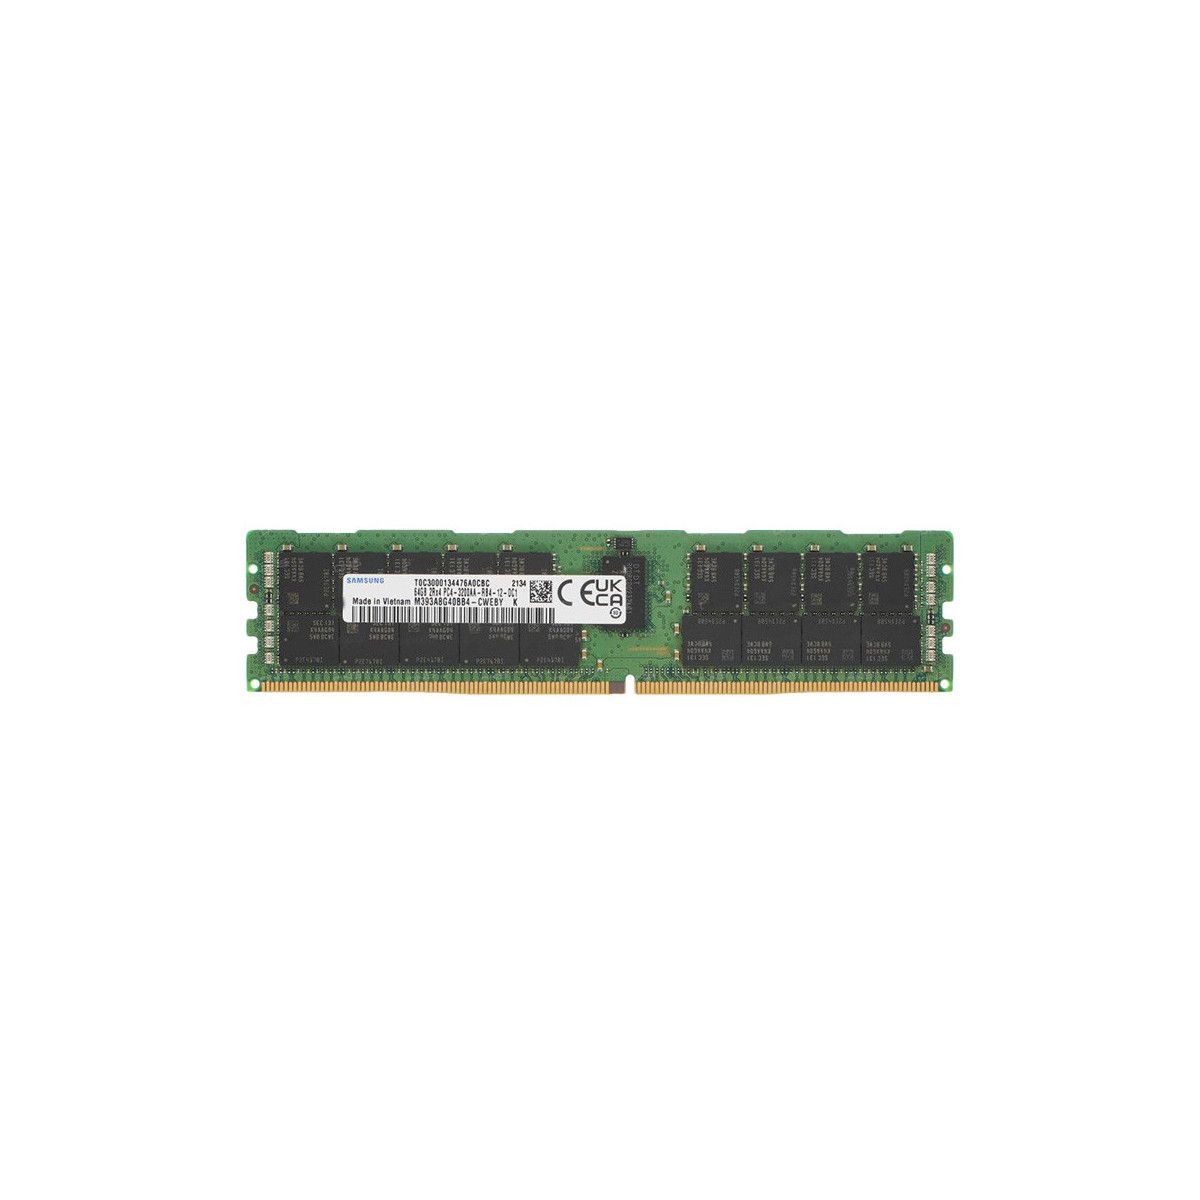 P2MYX-MS - Memstar 1x 64GB DDR4-3200 RDIMM PC4-25600R - Mem-Star Compatible OEM Memory 1 - Memstar 